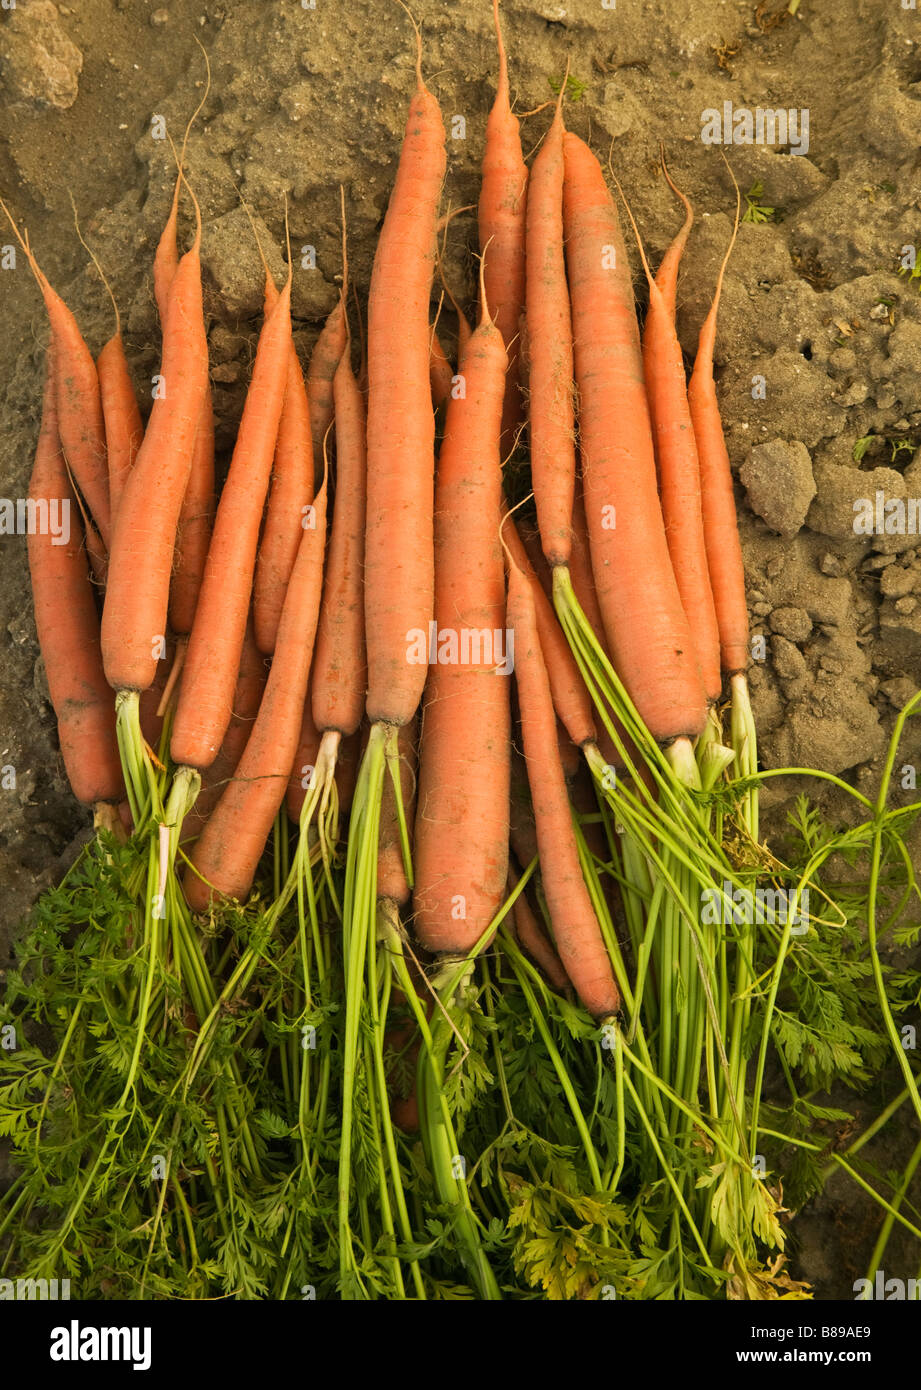 Appena raccolto carote 'Daucus carota". Foto Stock